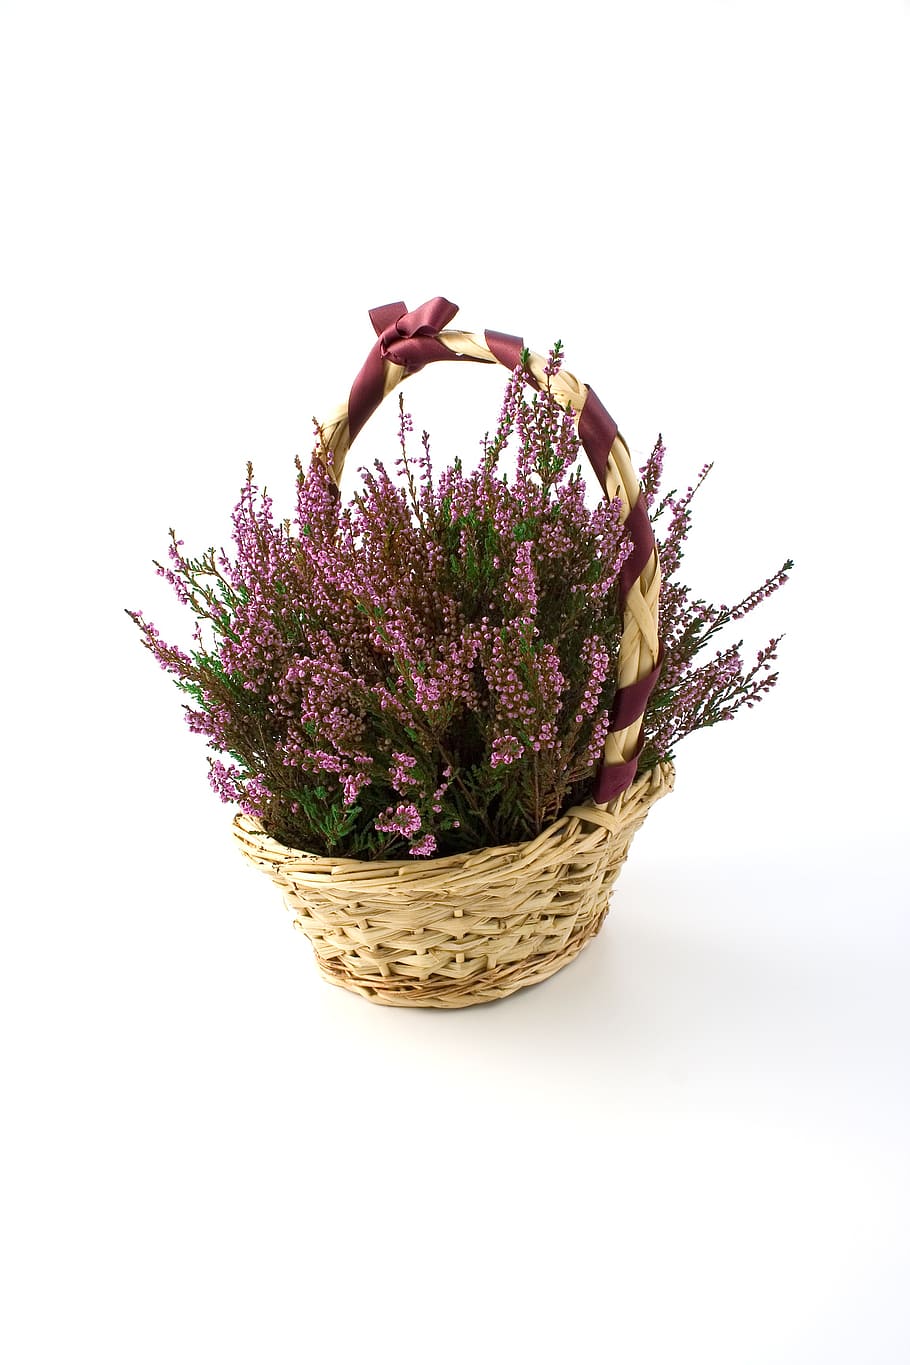 pink, flowers arrangement, brown, basket, flower, flowers, baskets, heath, heather, bell